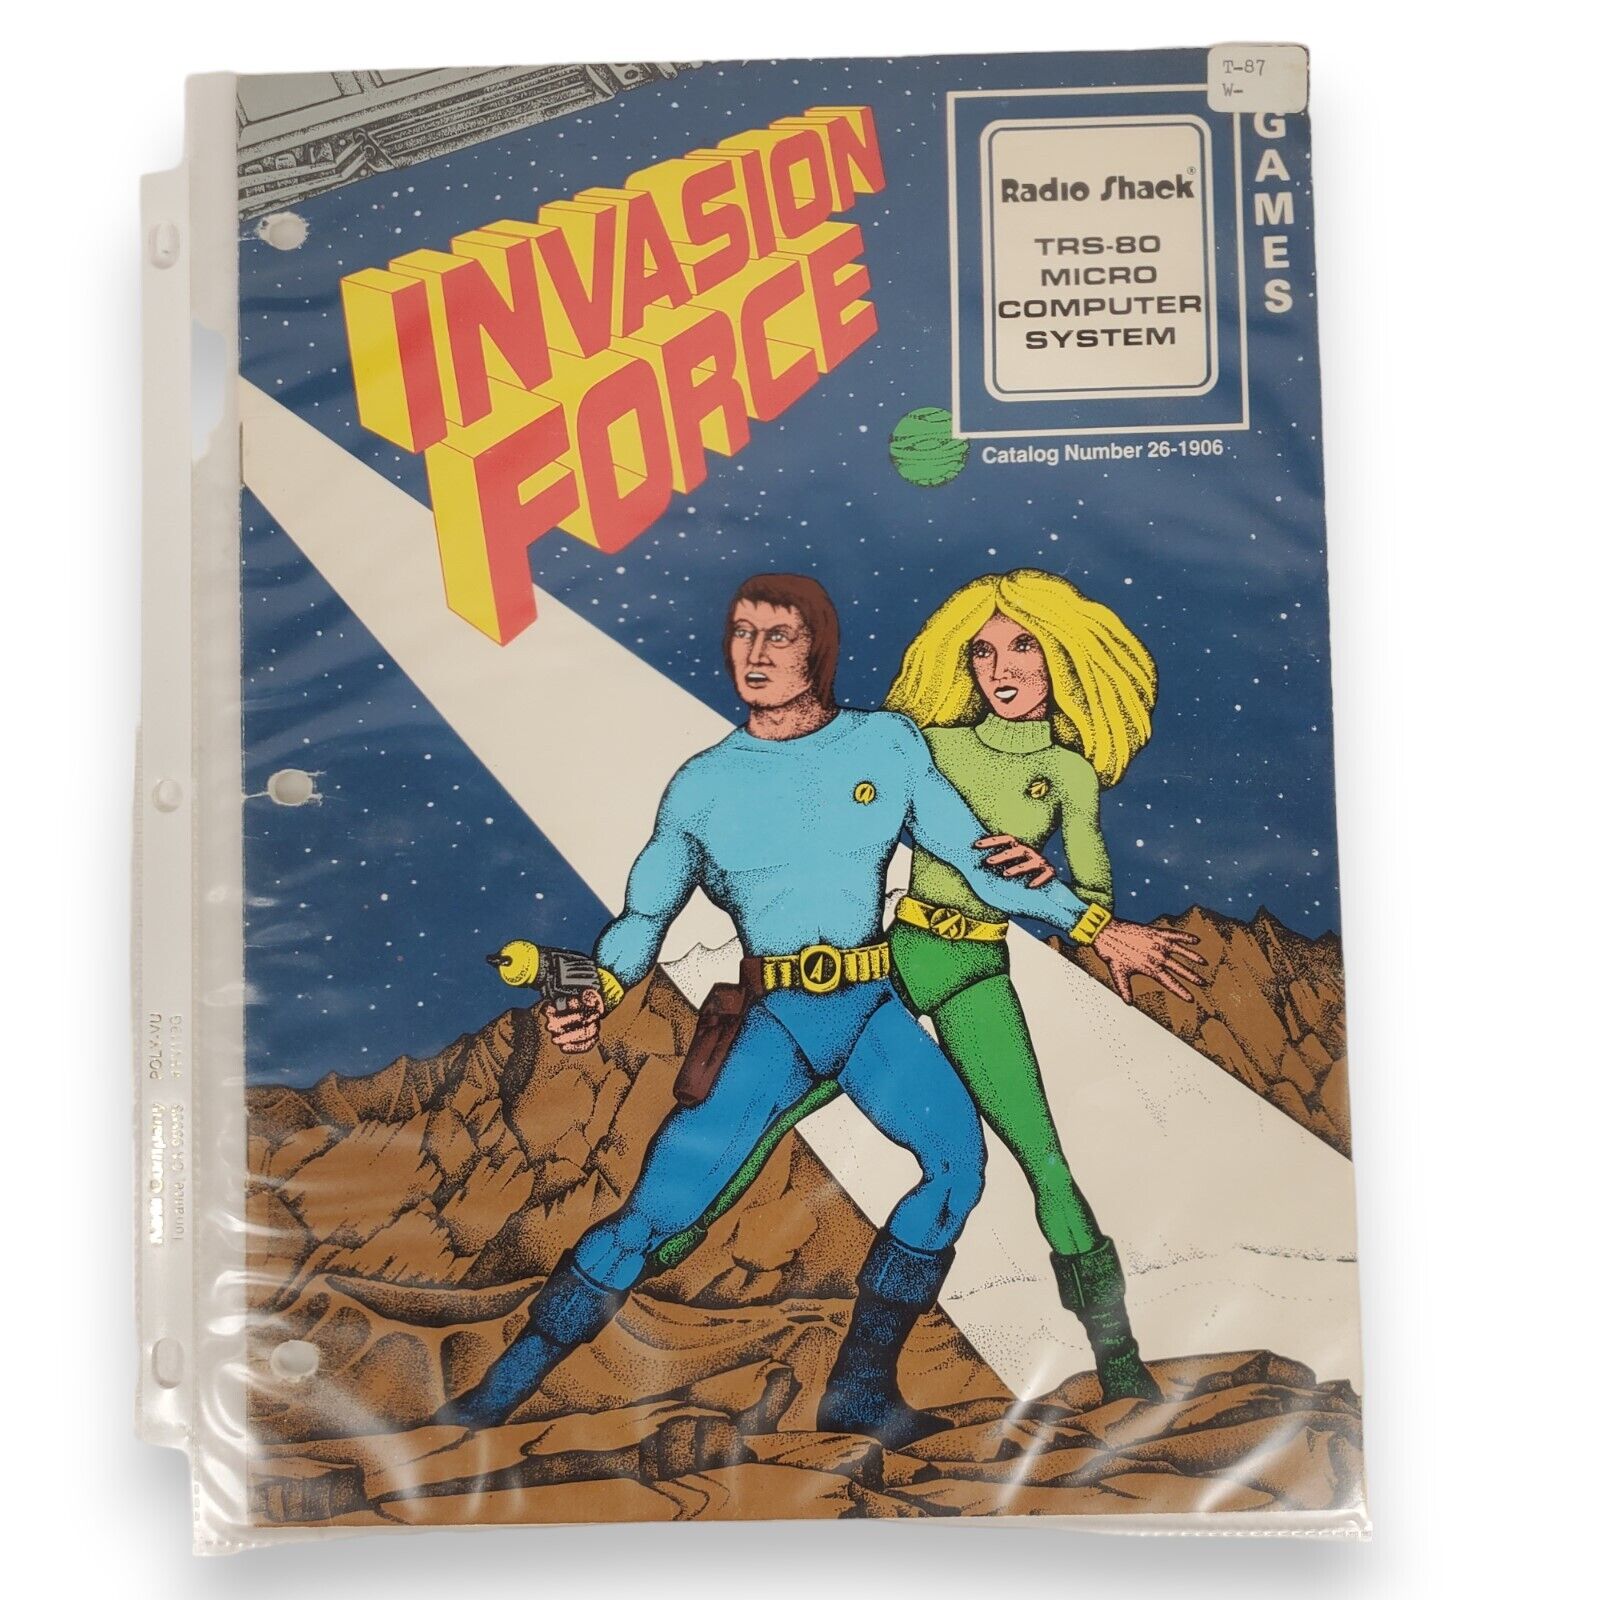 Vintage 1979 Original Invasion Force Game MANUAL ONLY for TRS-80 26-1906